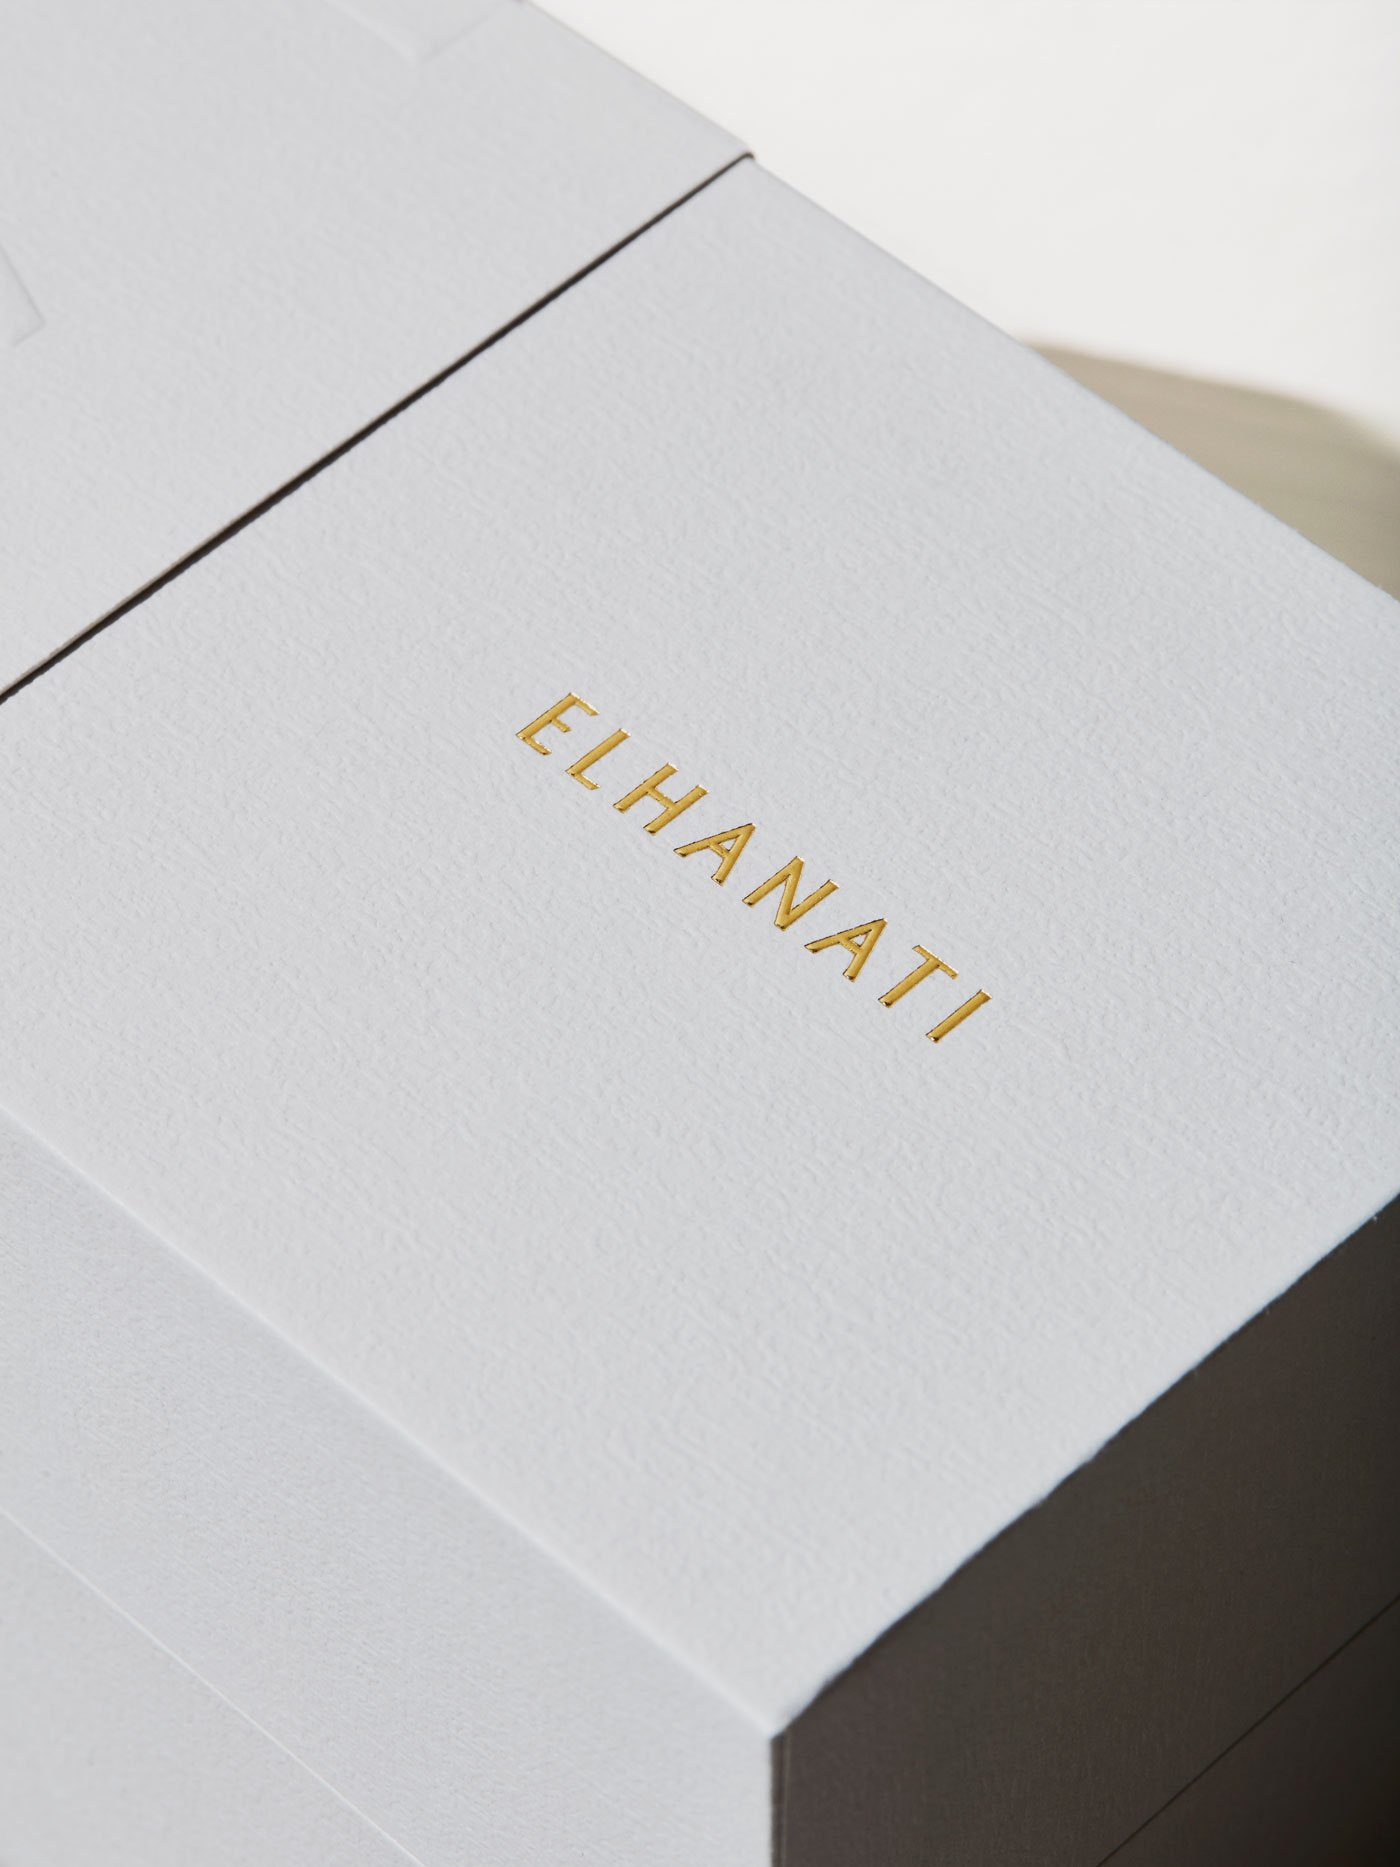 Elhanati – Packaging